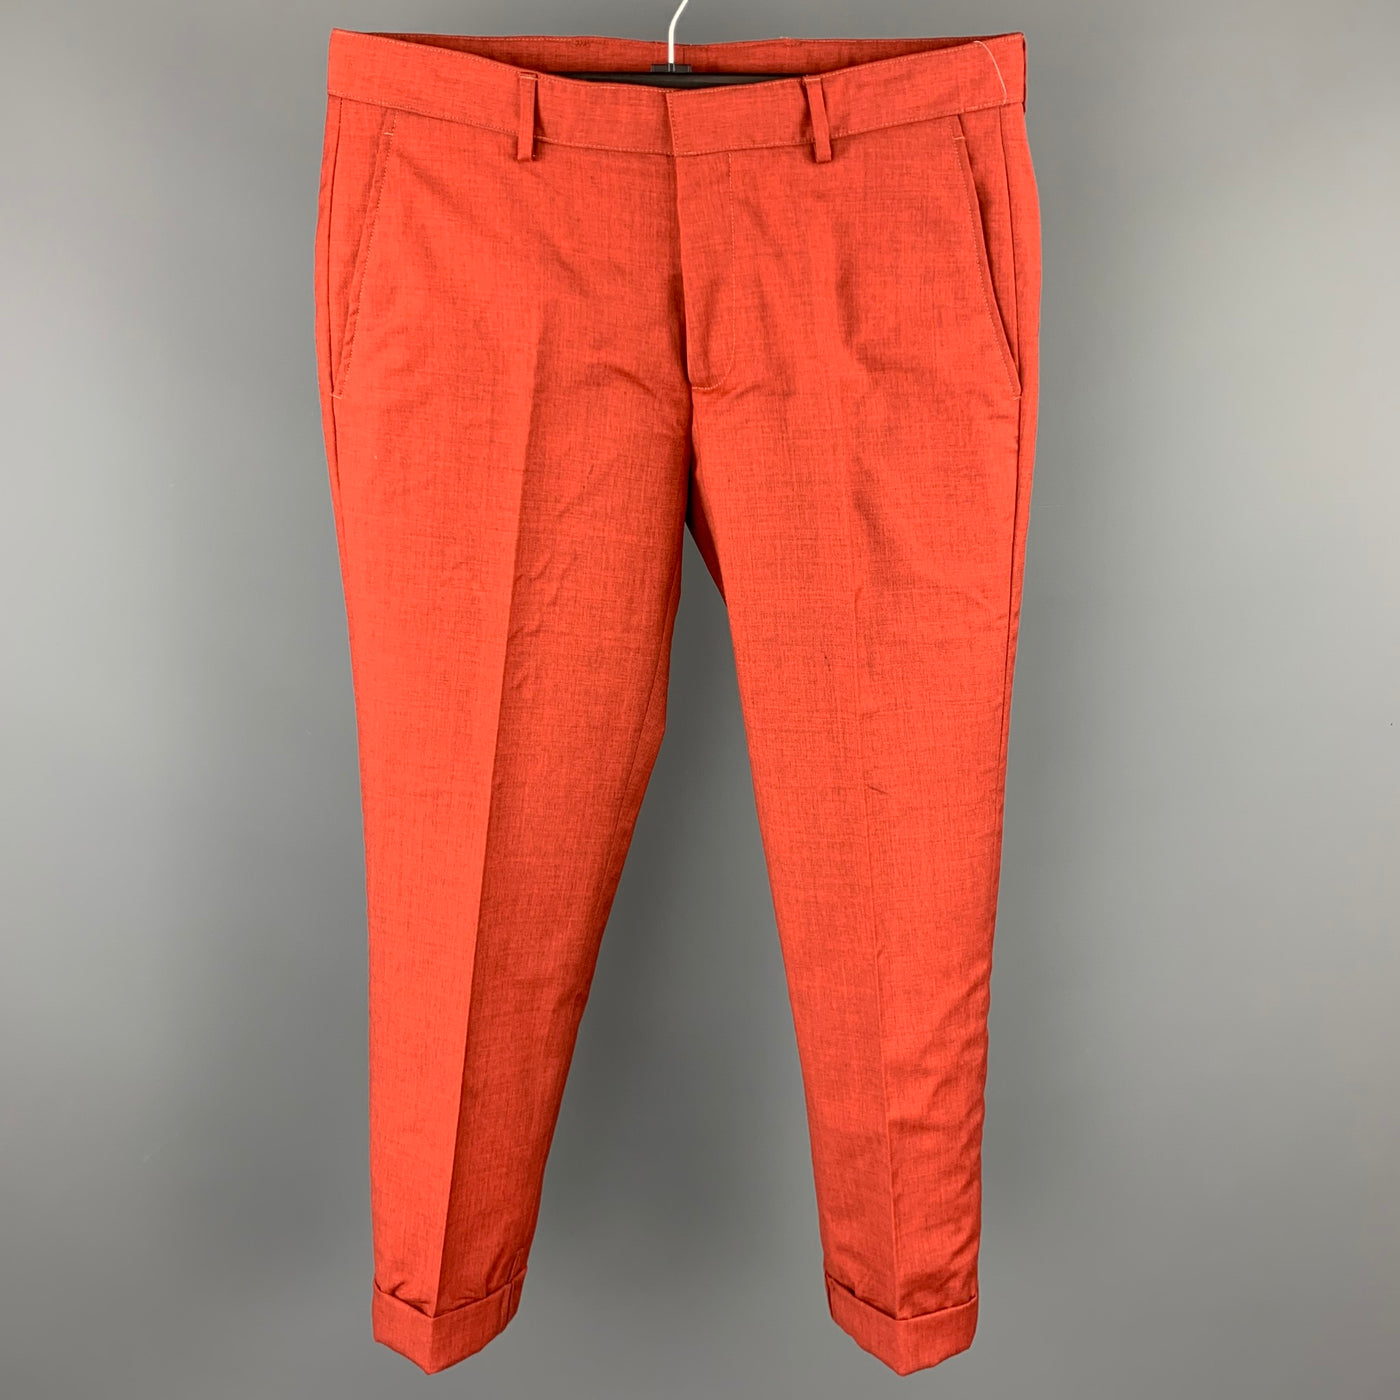 CALVIN KLEIN COLLECTION Size 32 Brick Polyamide Zip Fly Dress Pants